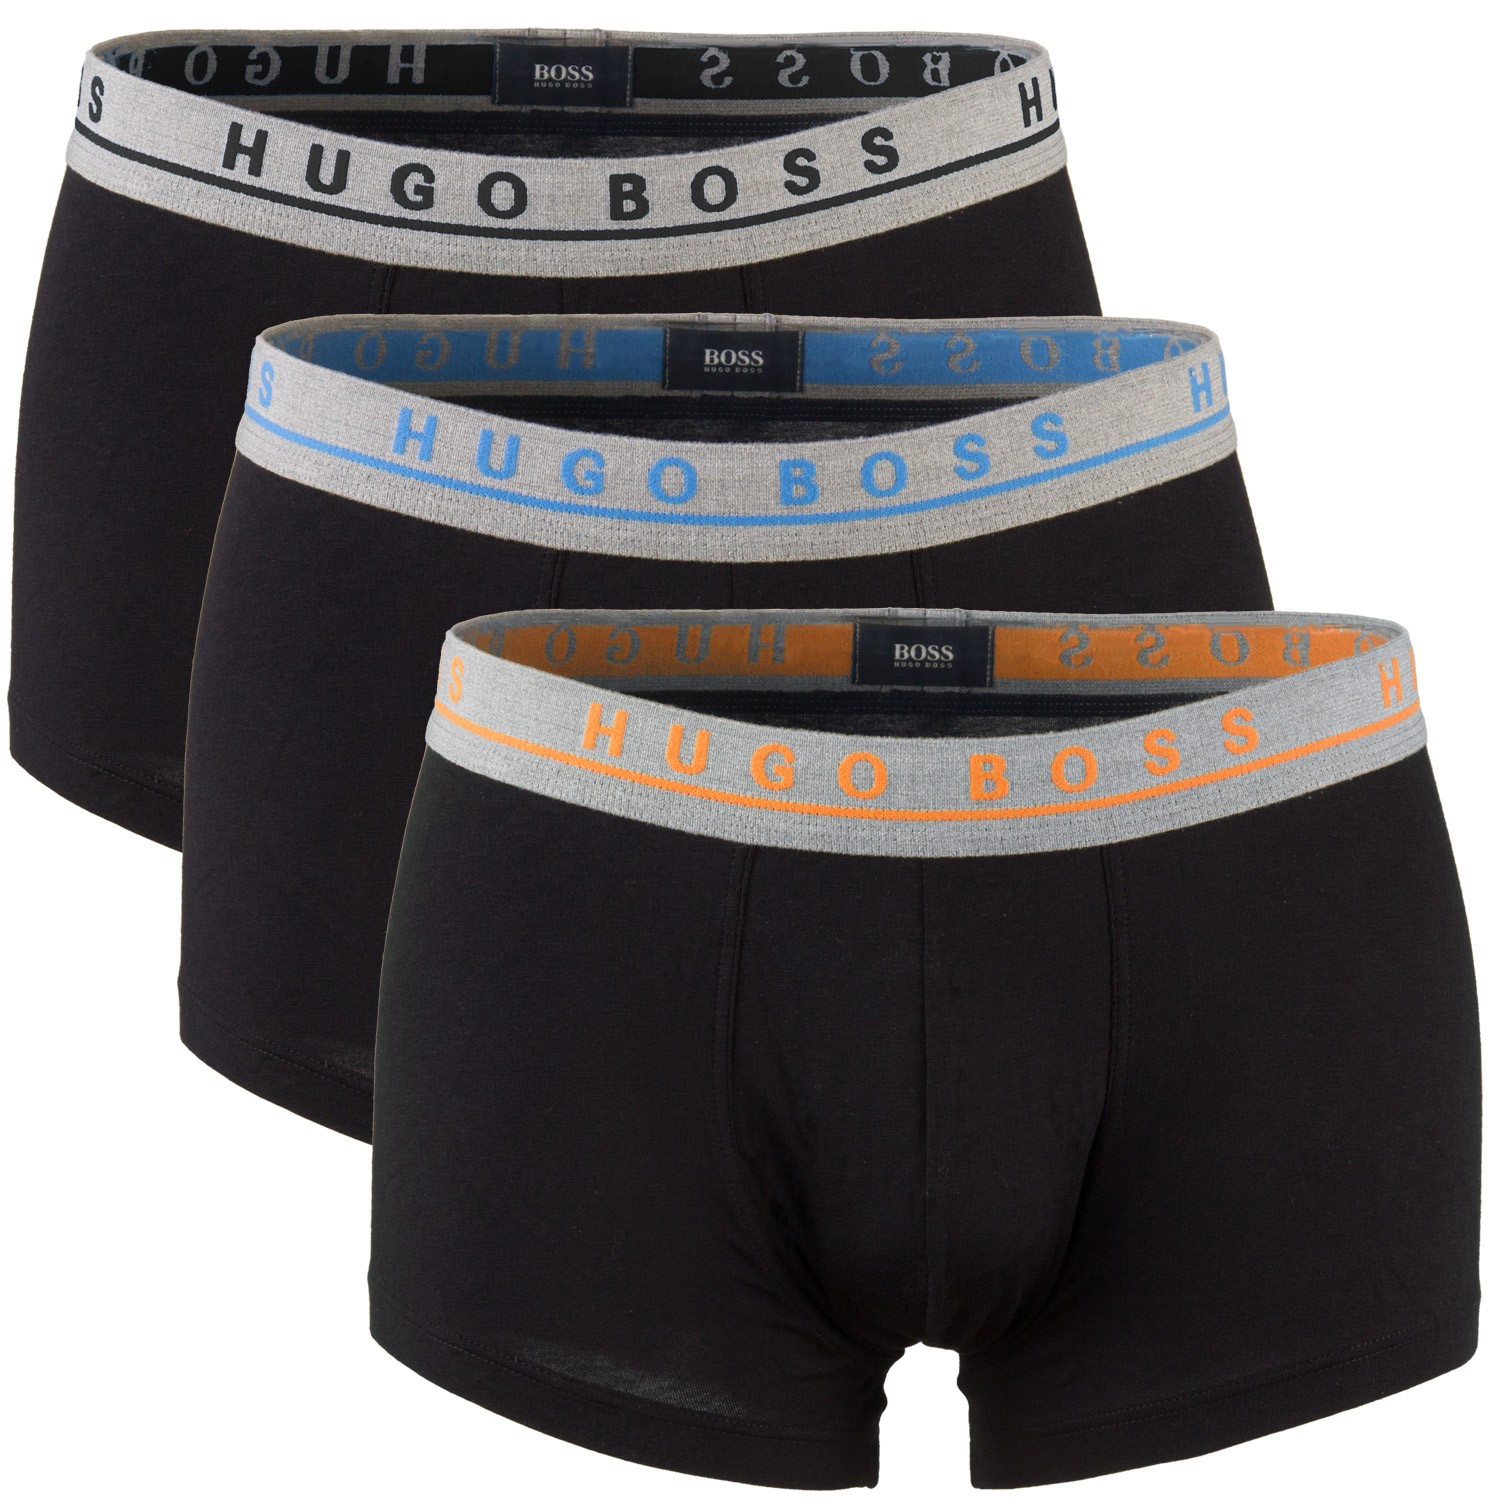 3-Pack Hugo Boss Cotton Stretch Boxers BM - Boxer - Trunks - Underwear ...